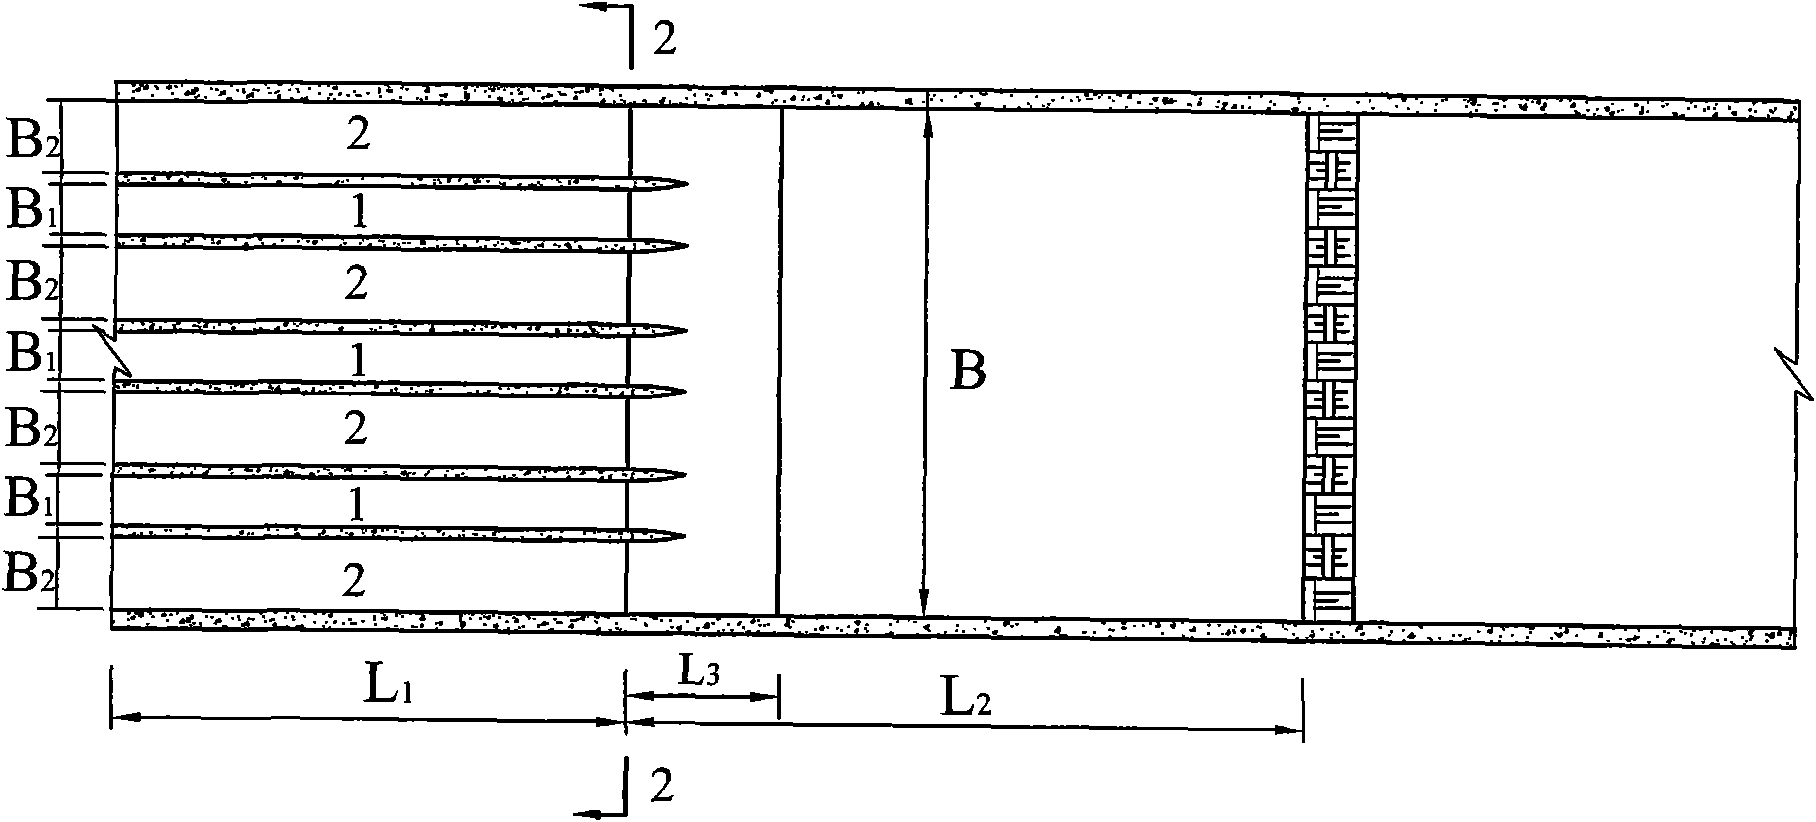 Differential column-splitting inlet energy dissipater